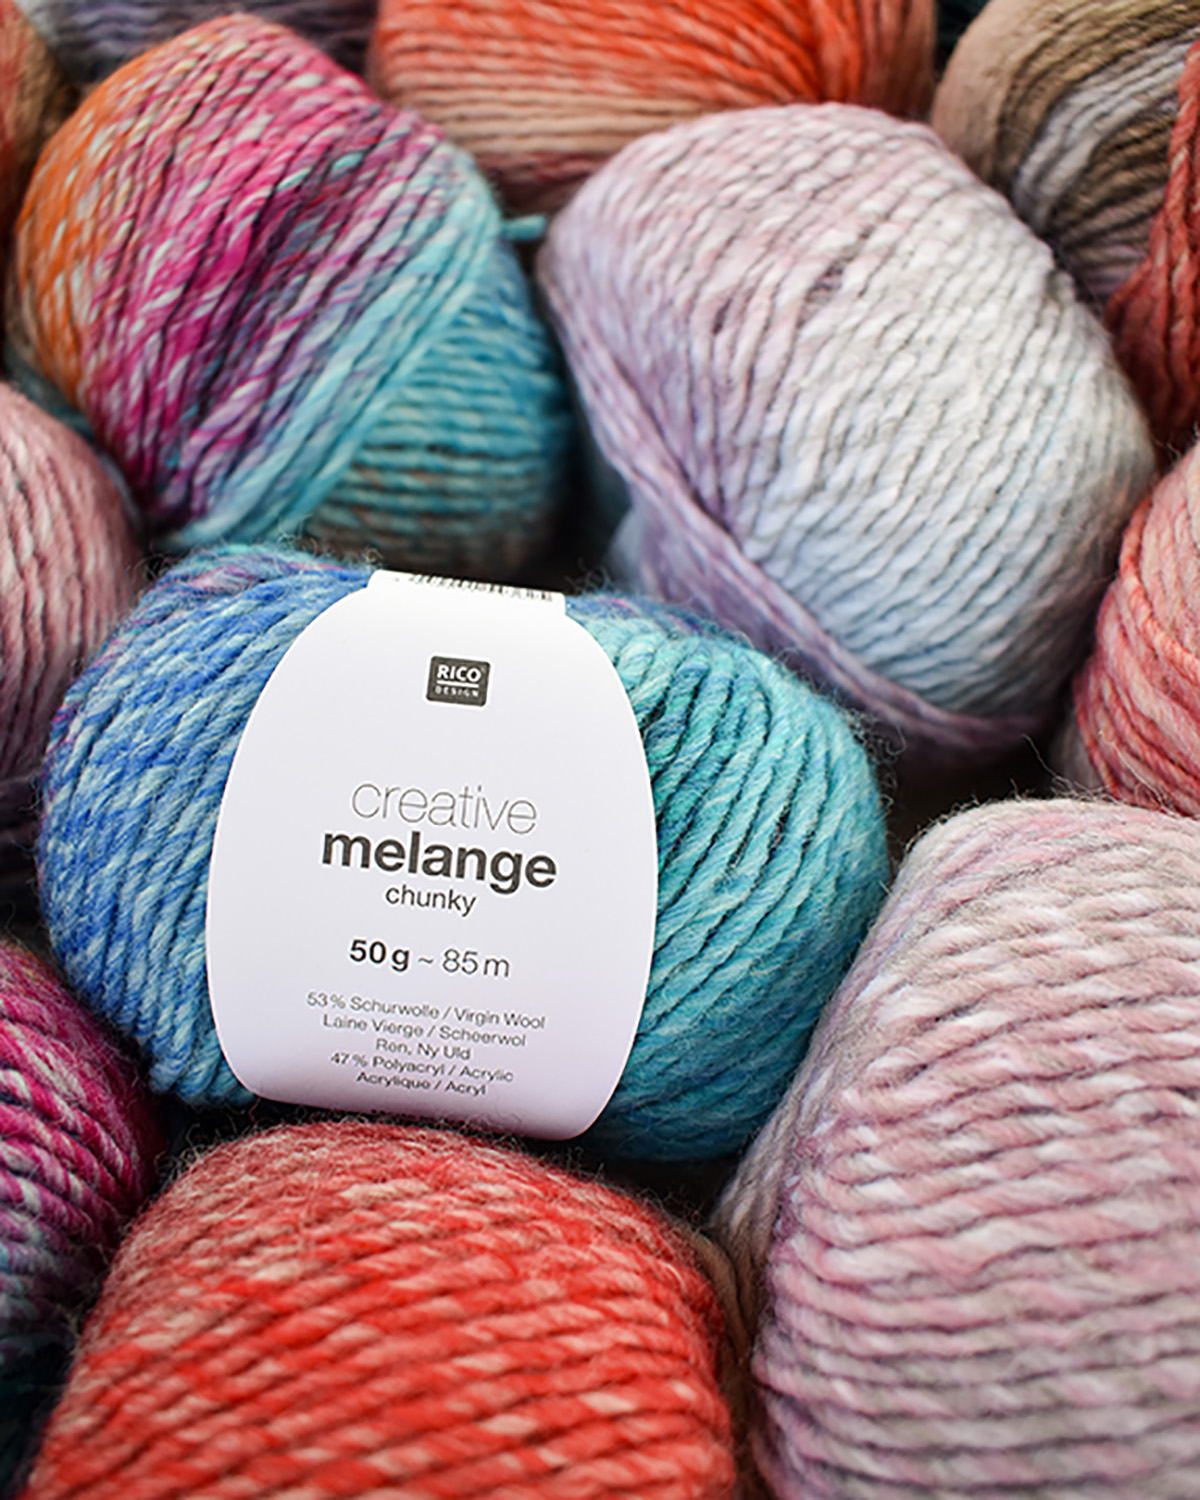 50g/100g Soft Yarn Colorful Yarn for Crocheting Knit Total